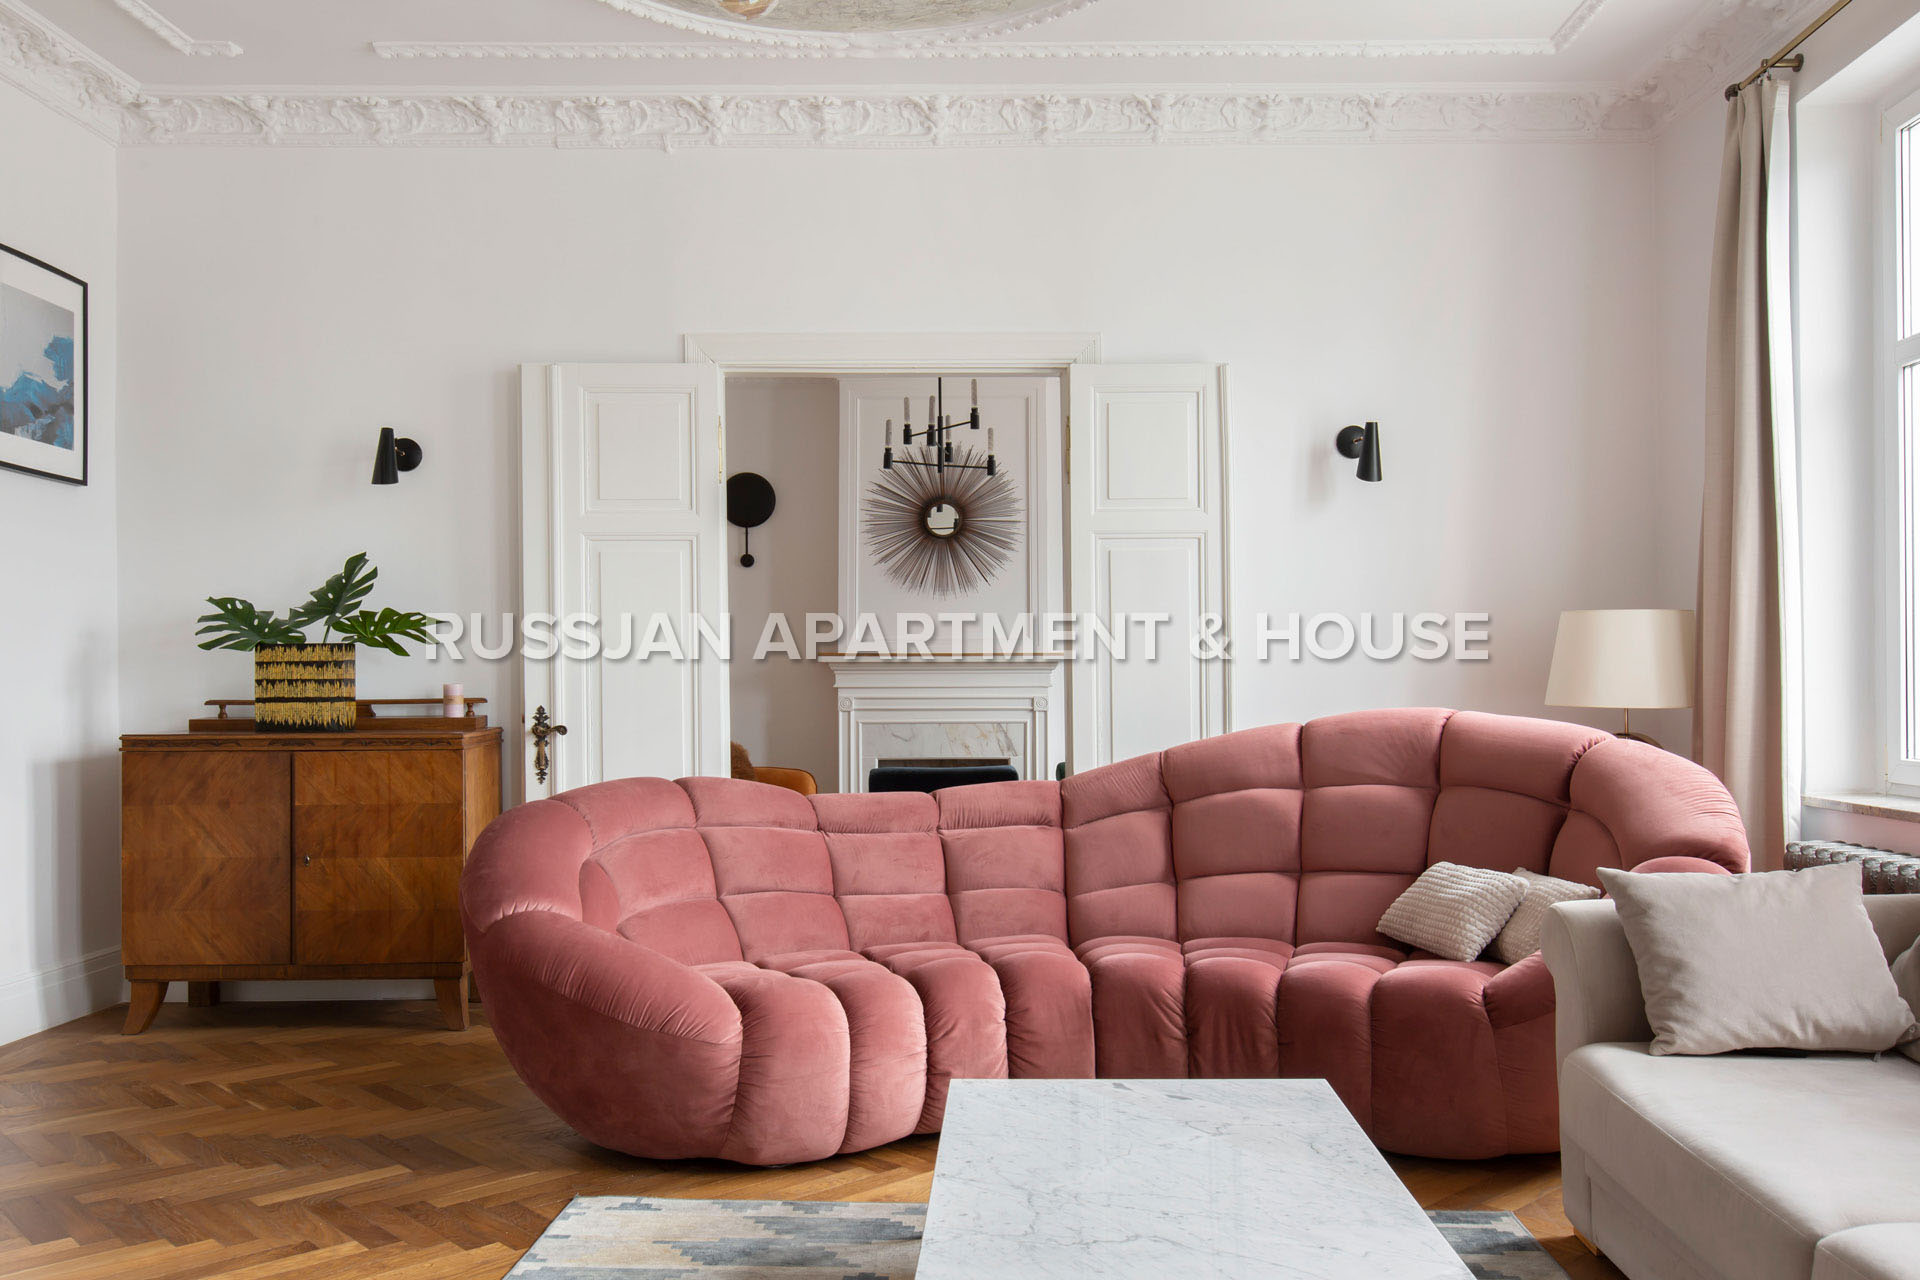 Gdańsk, apartment for rent Ulica Łąkowa | RUSSJAN Apartment & House